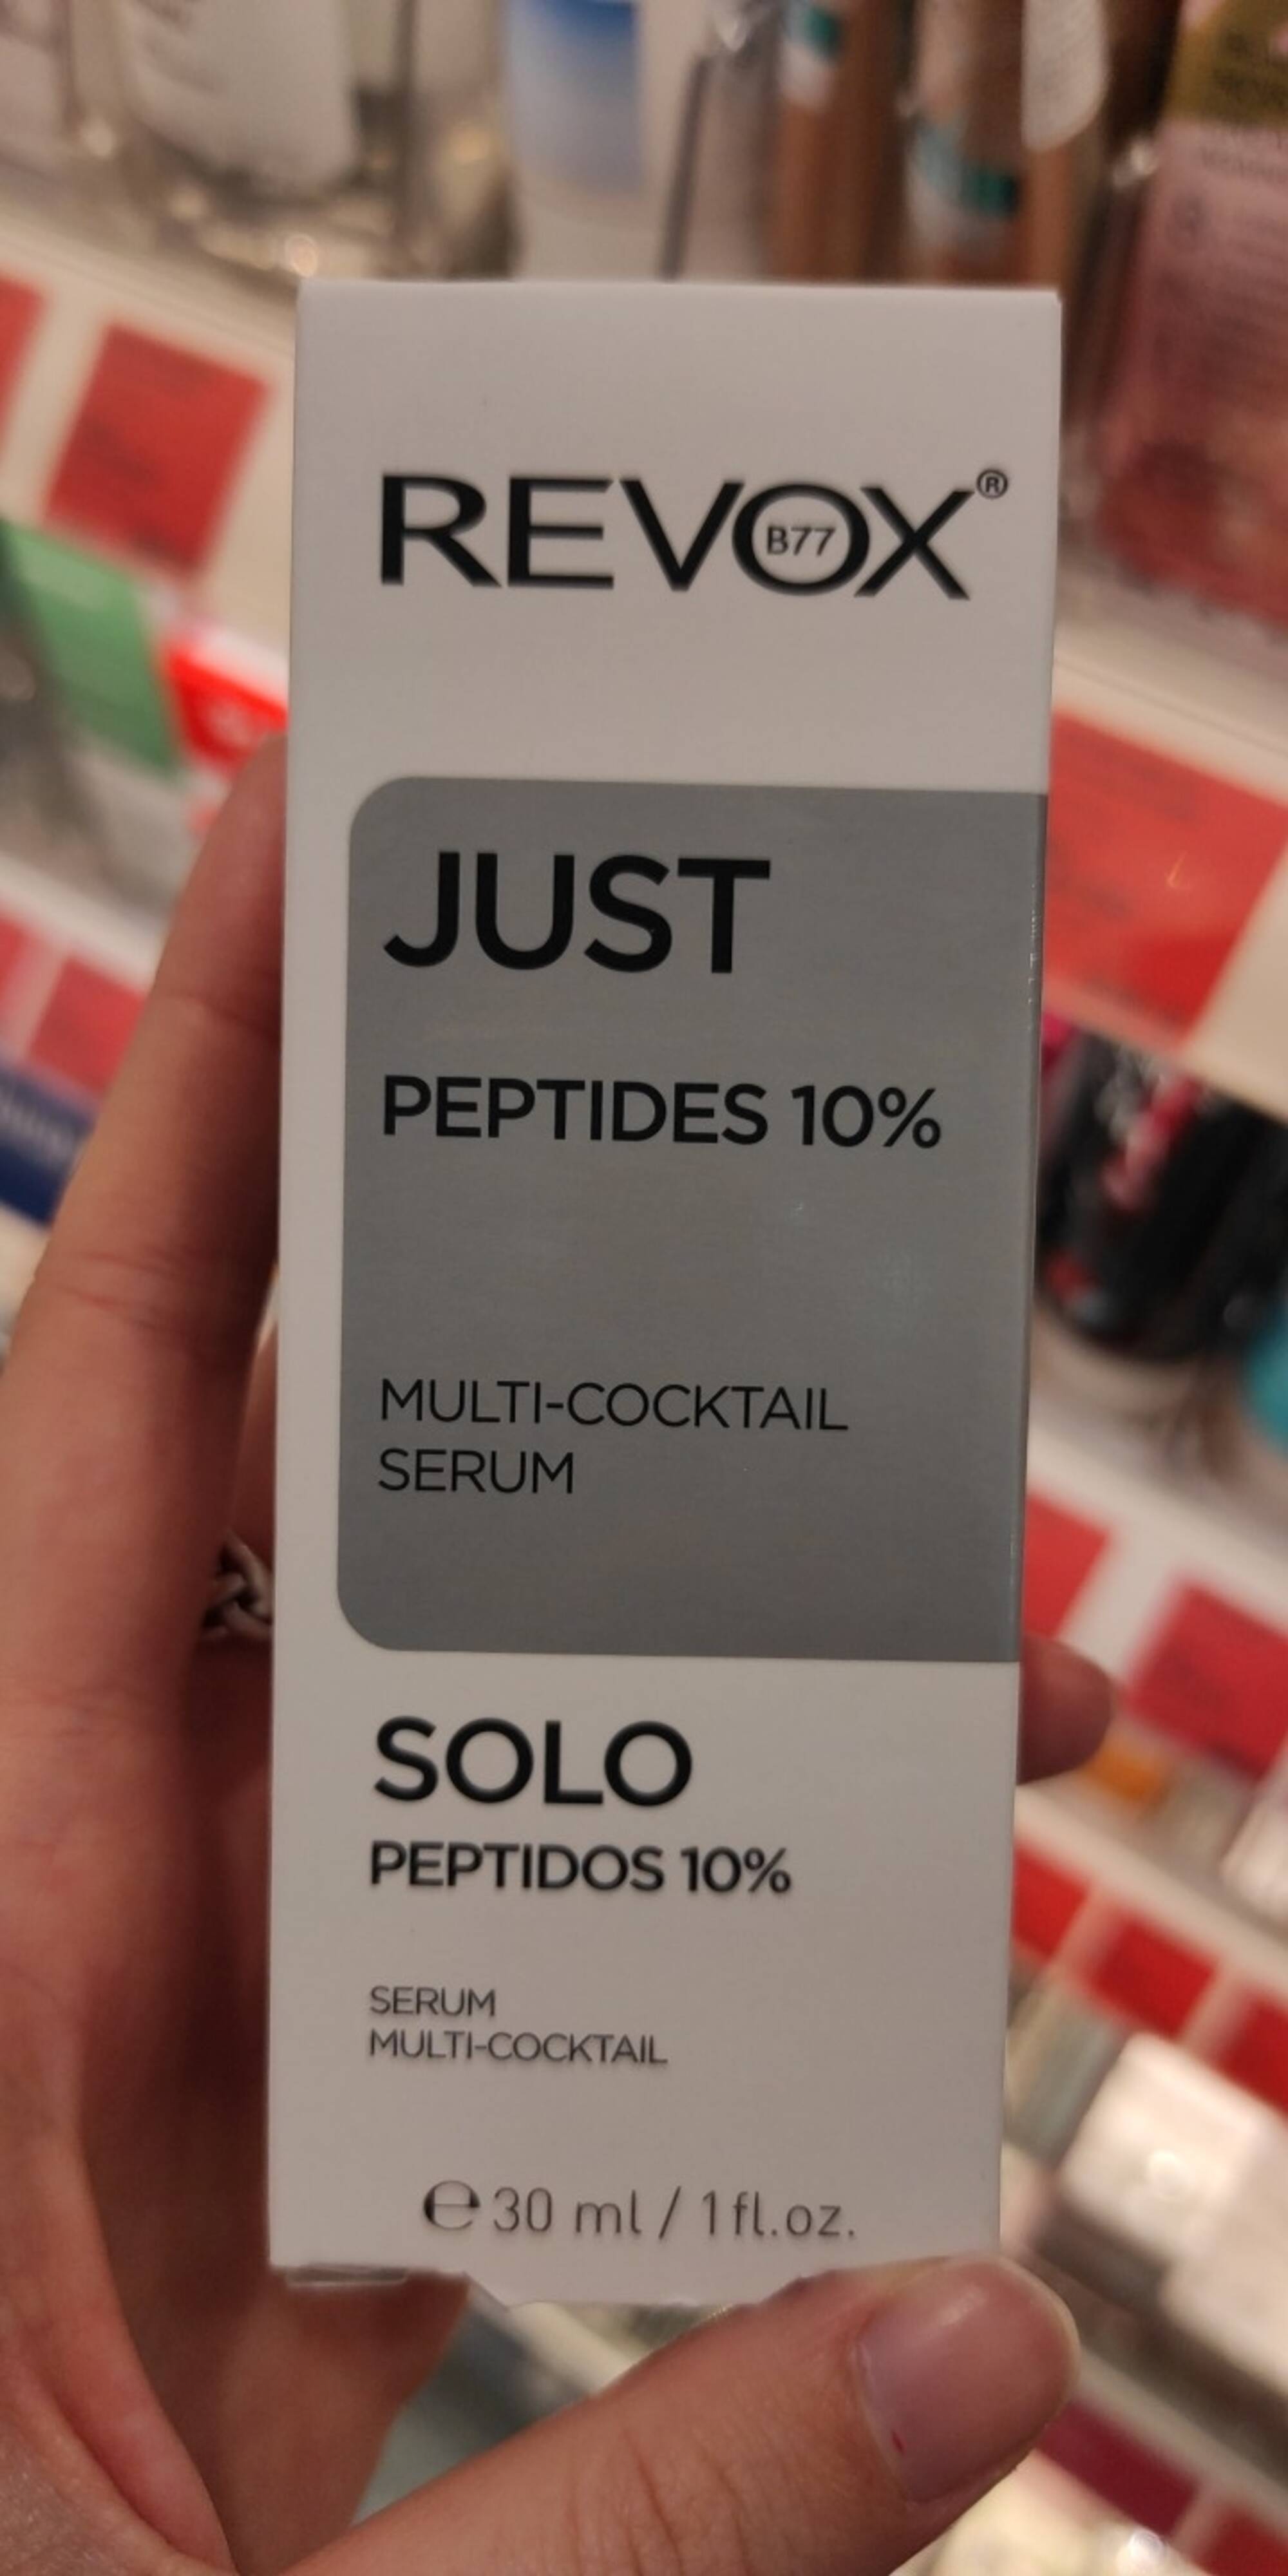 REVOX - Just peptides 10% - Multi-cocktail serum